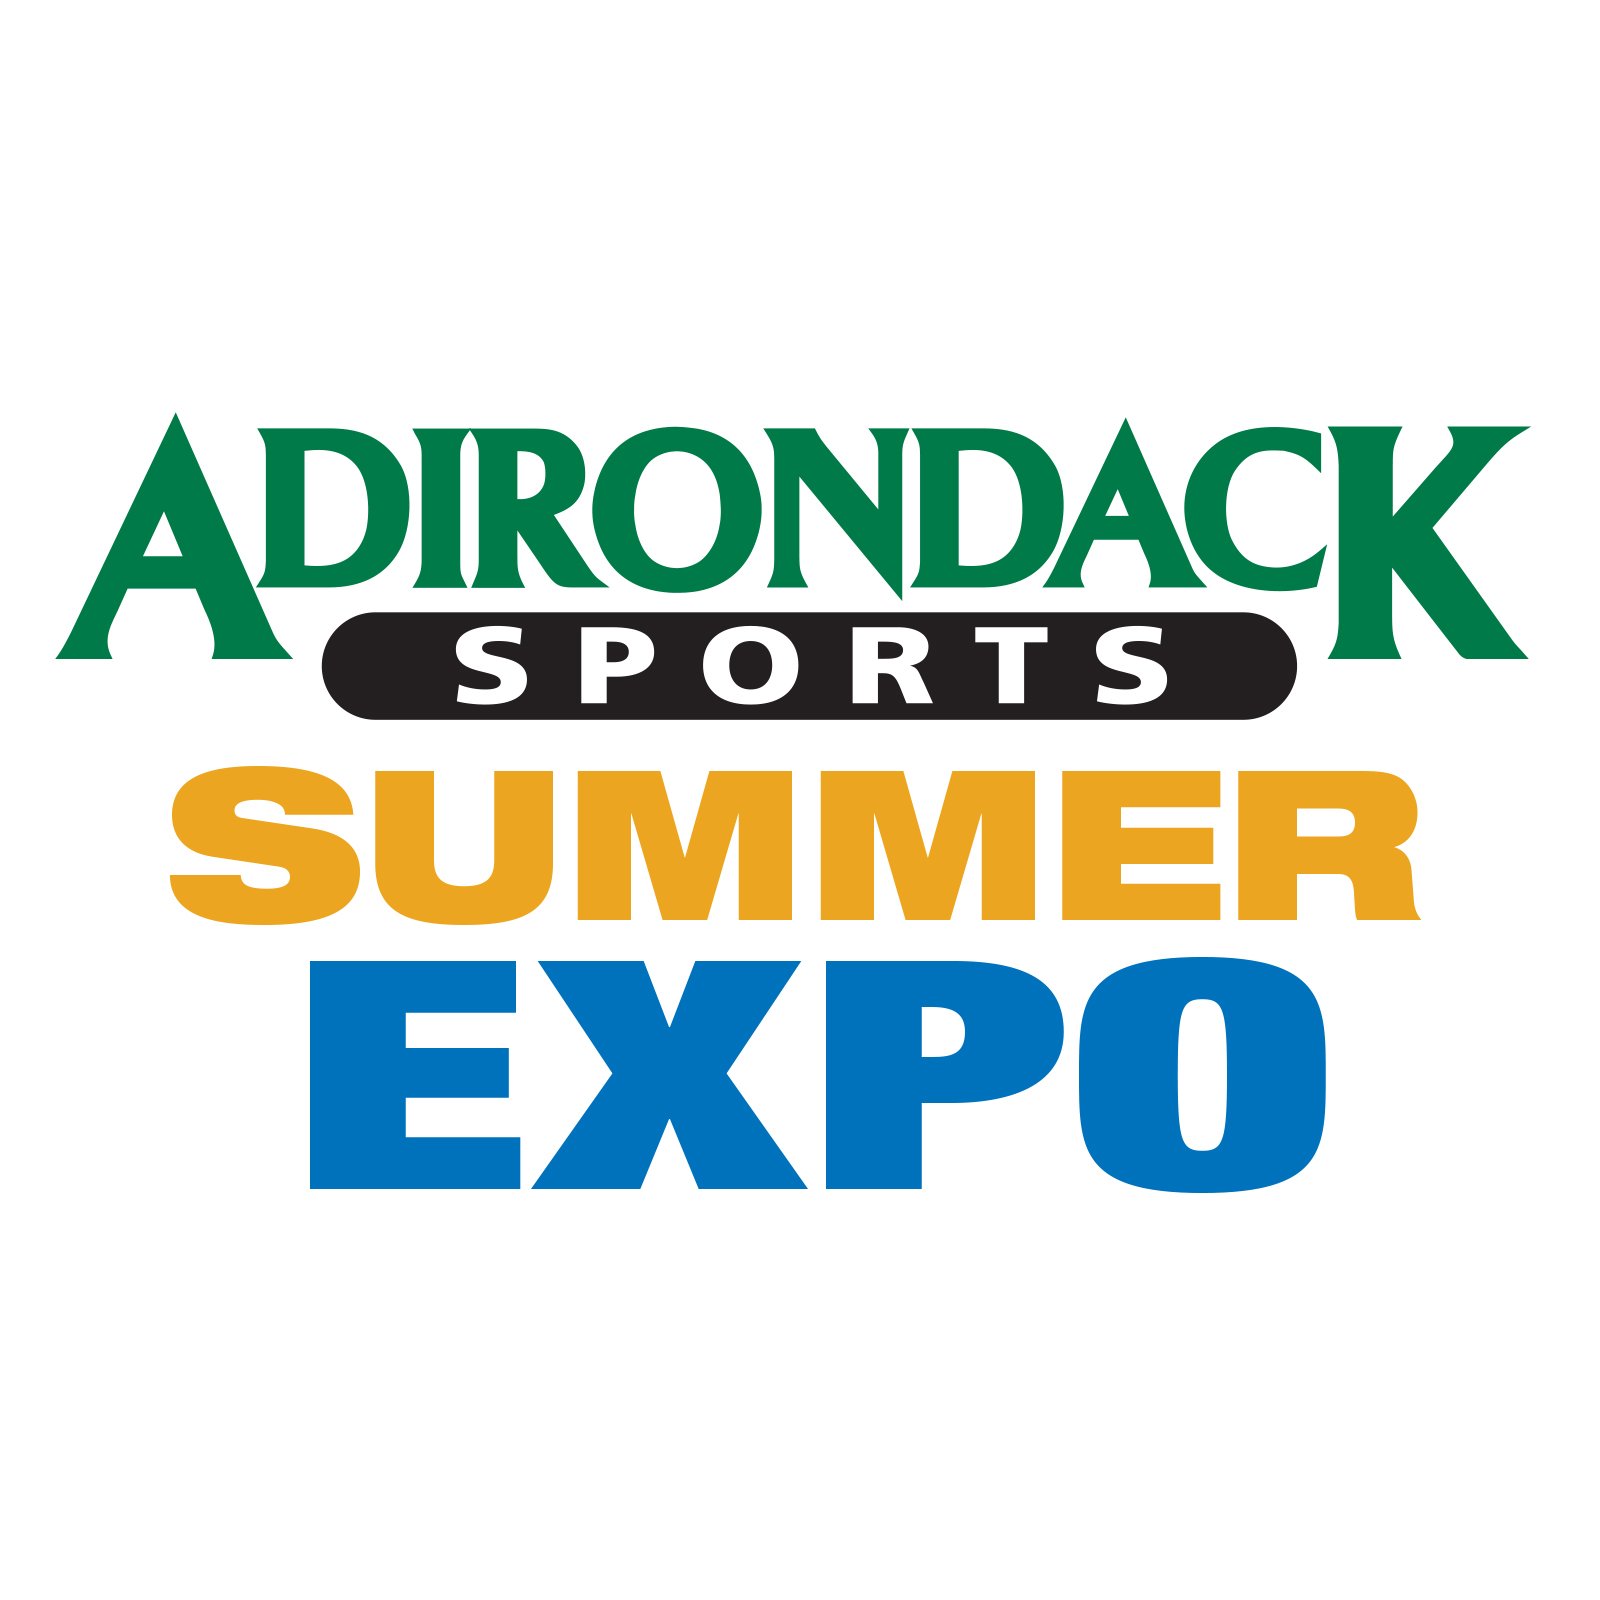 Adirondack-Sports-SUMMER-EXPO-simple-logo-1600x1600.jpg